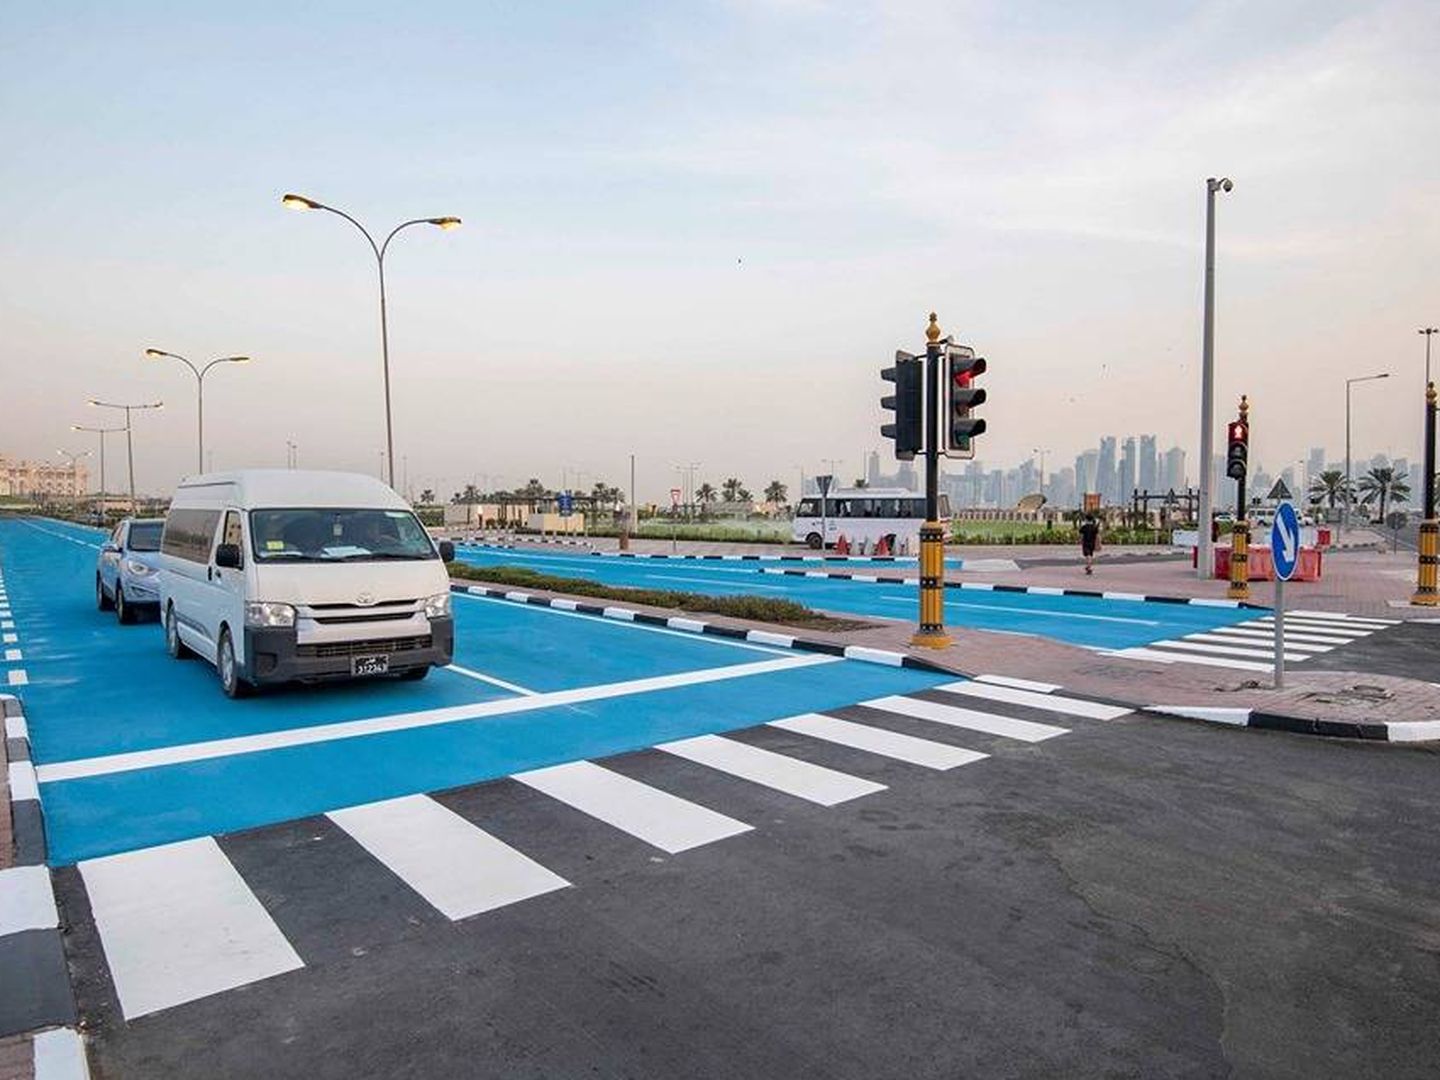 Imagen de la carretera pintada de azul. (Foto: Qatar Tribune / Twitter)